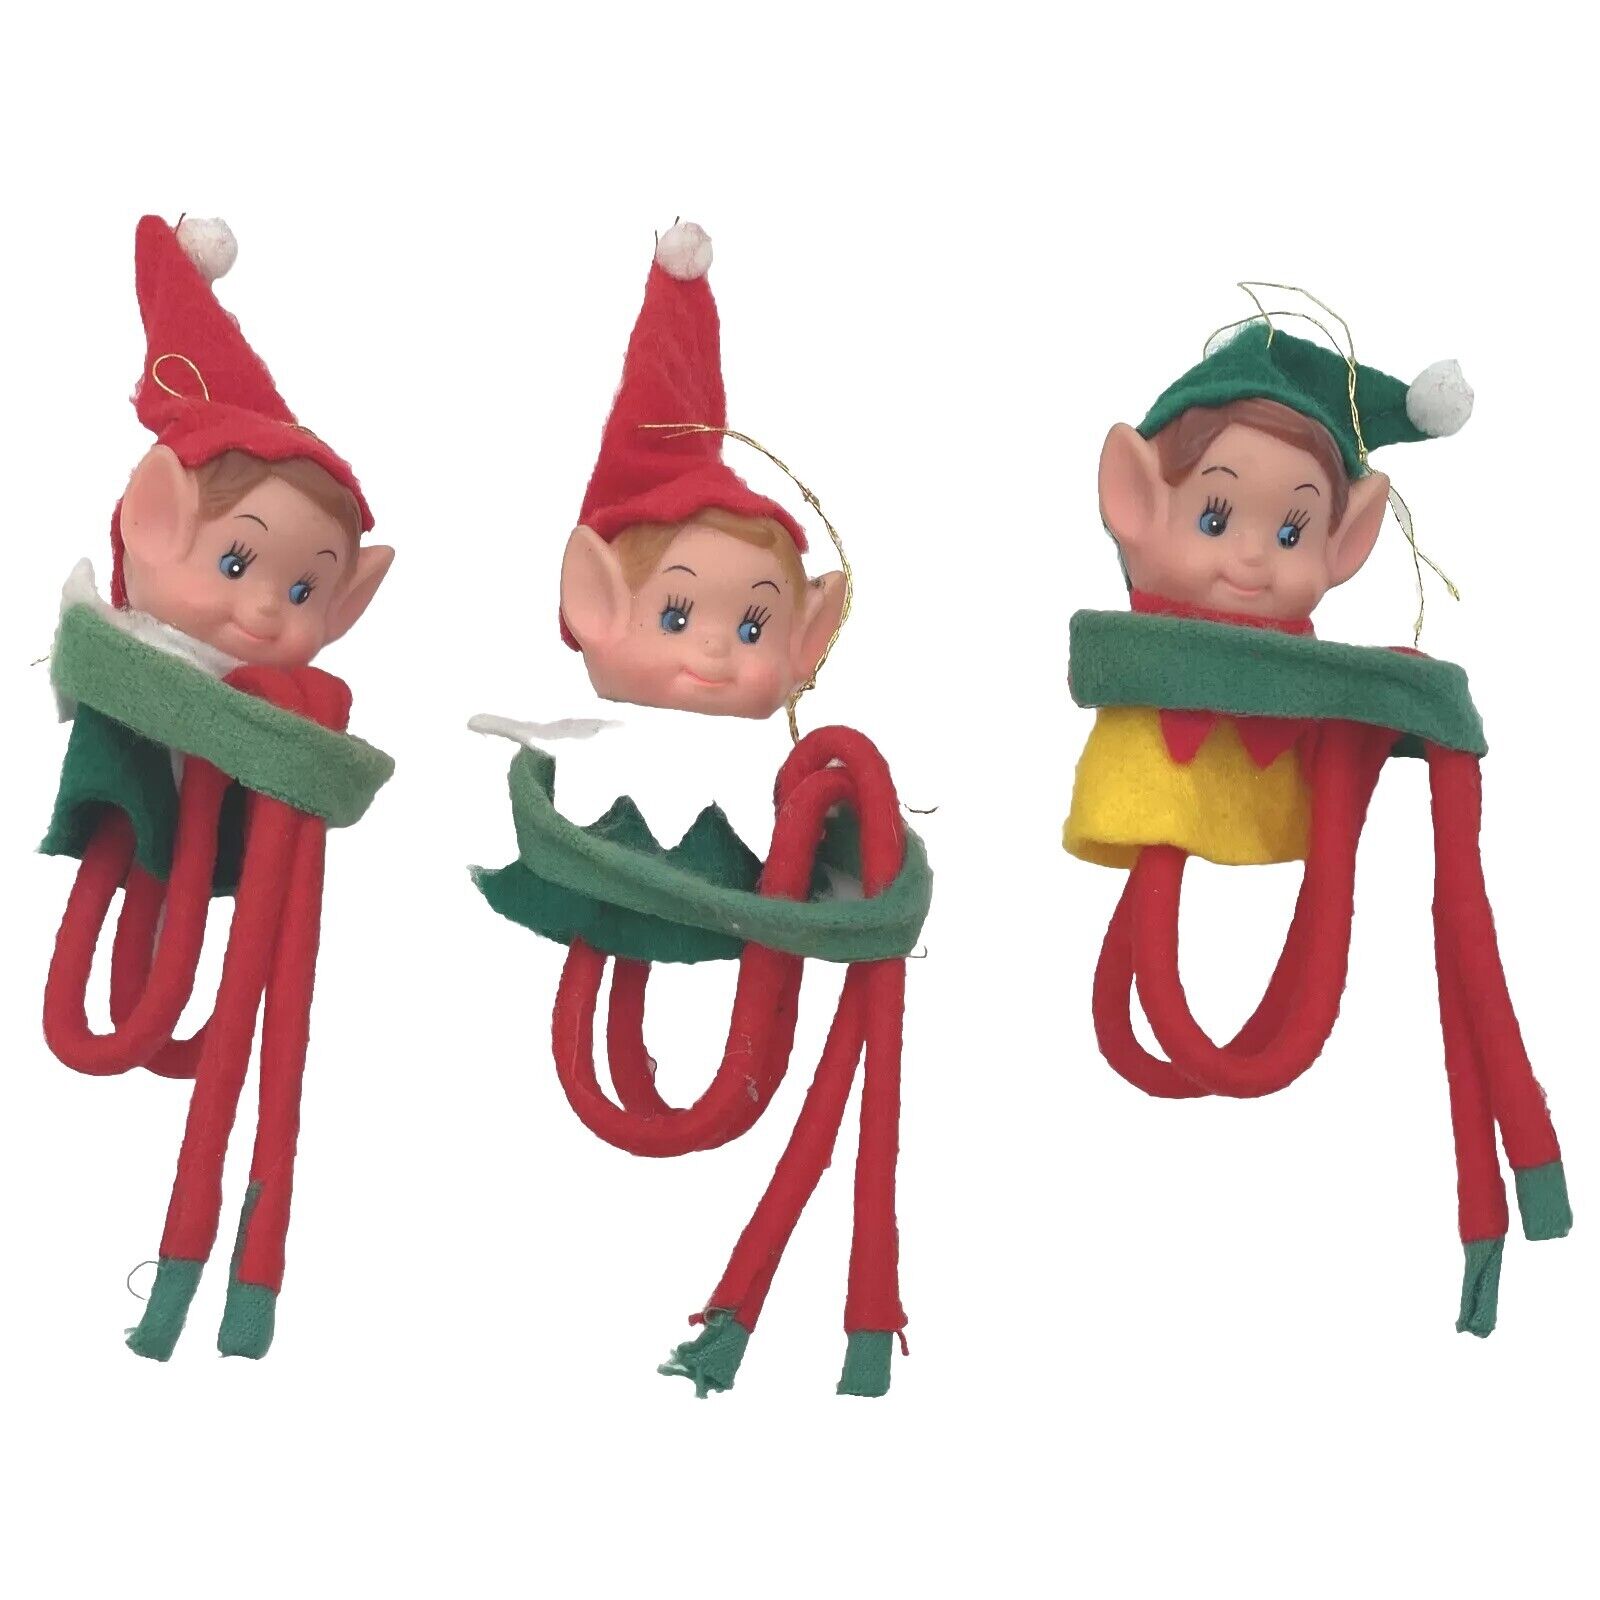 3 Vintage Small Knee Huggers Elves Elf Ornament Christmas Decor Red Green